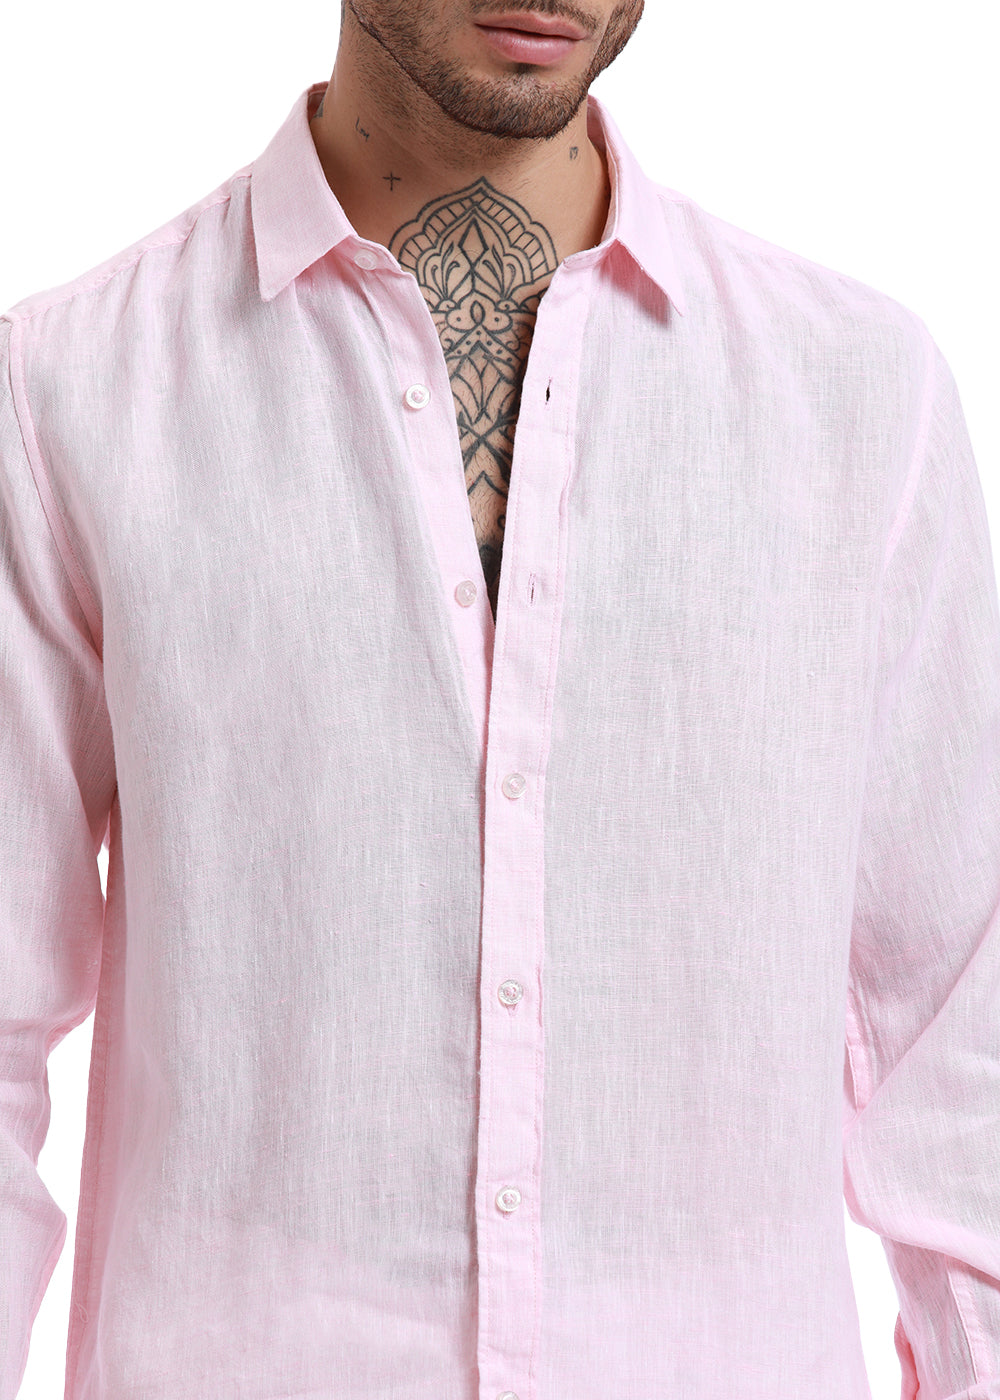 Pastel Pink Linen Shirt Front